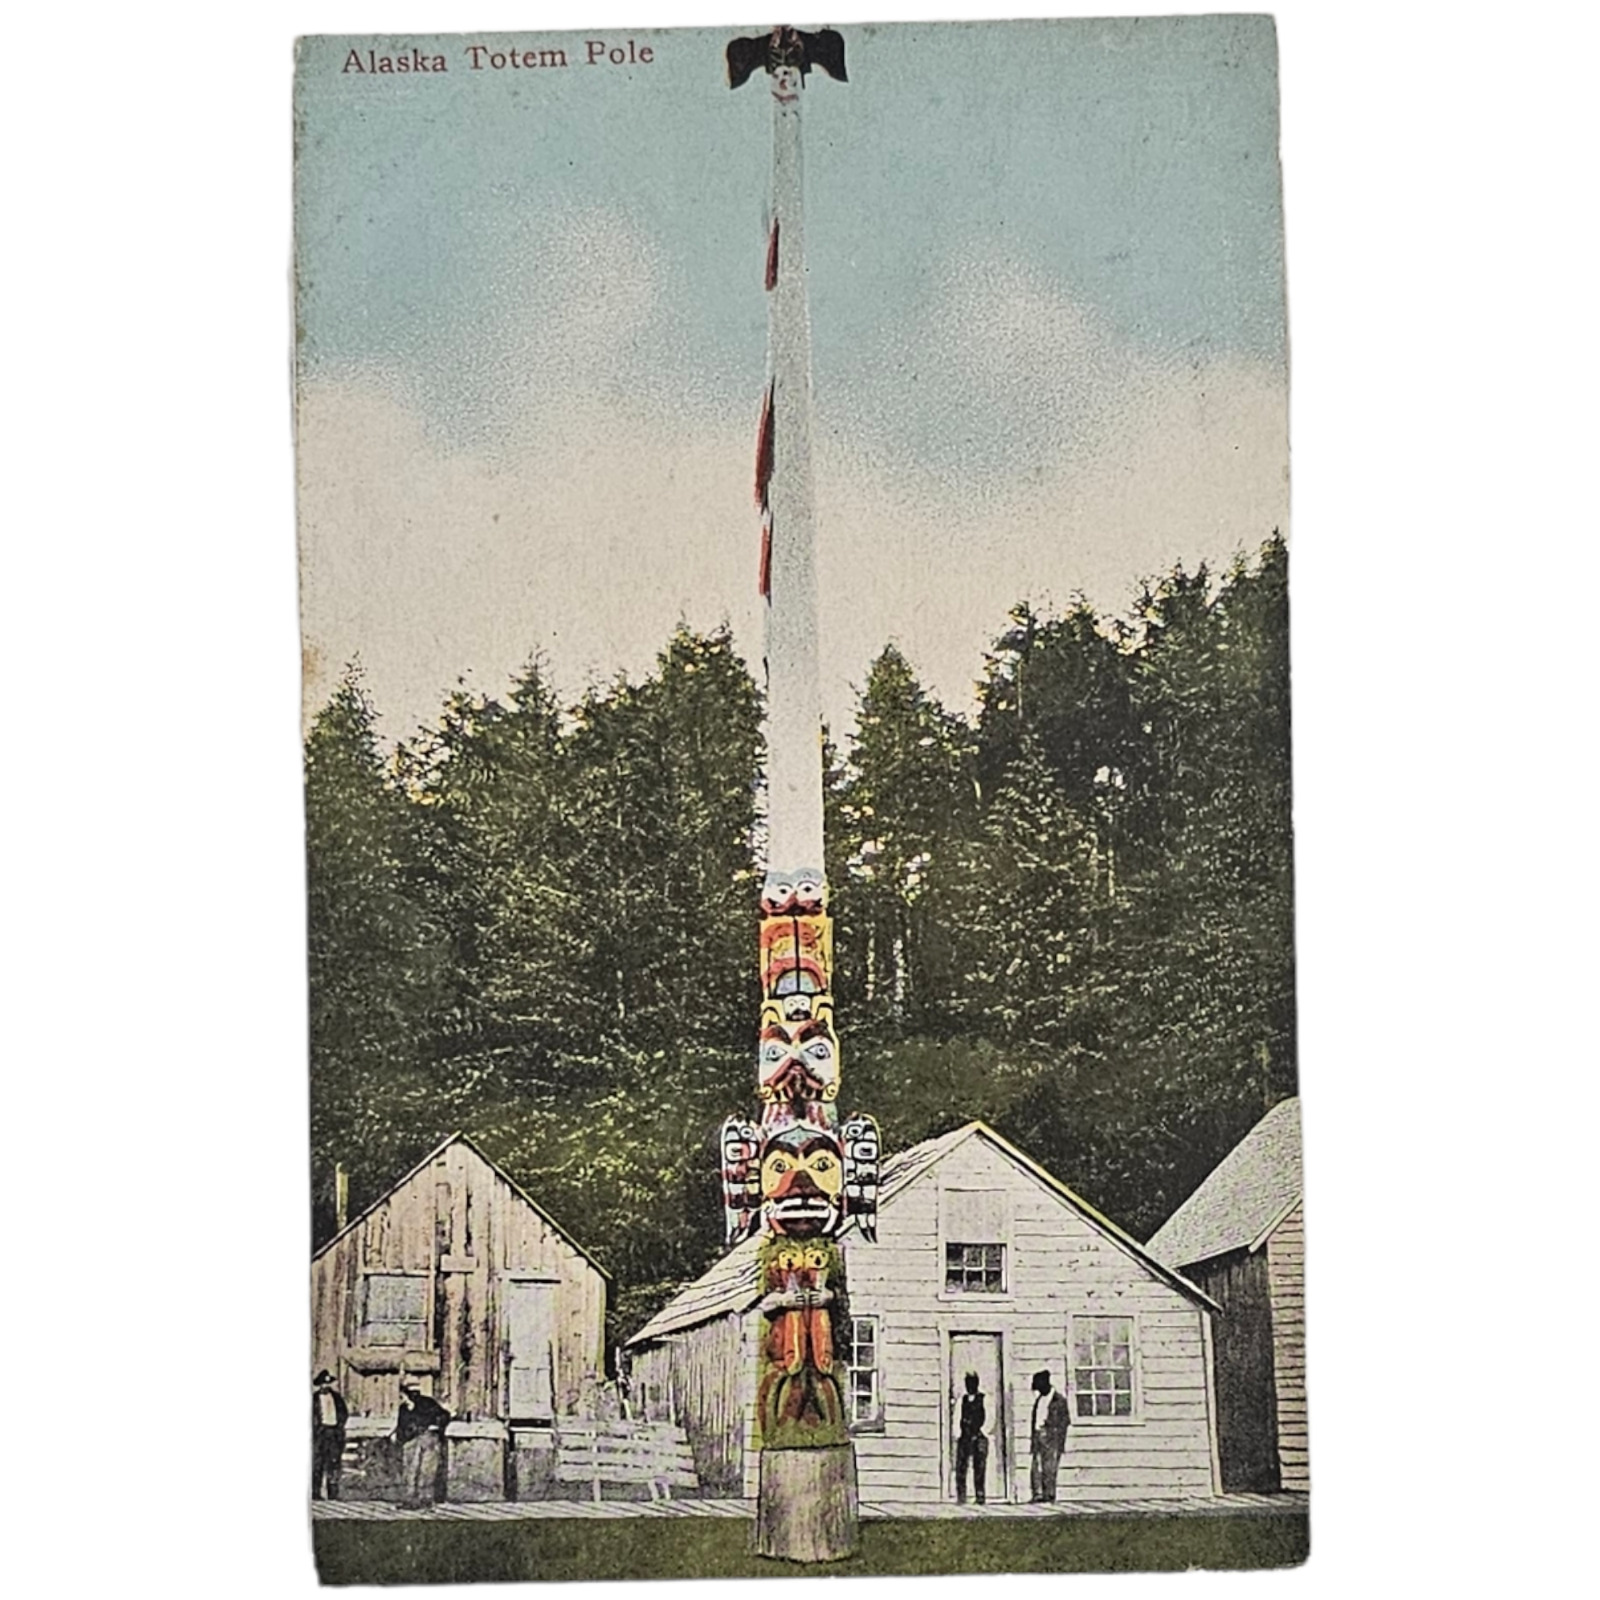 Alaska Totem Pole Lowman Hanford Co Postcard 1910s Vintage by Nowell